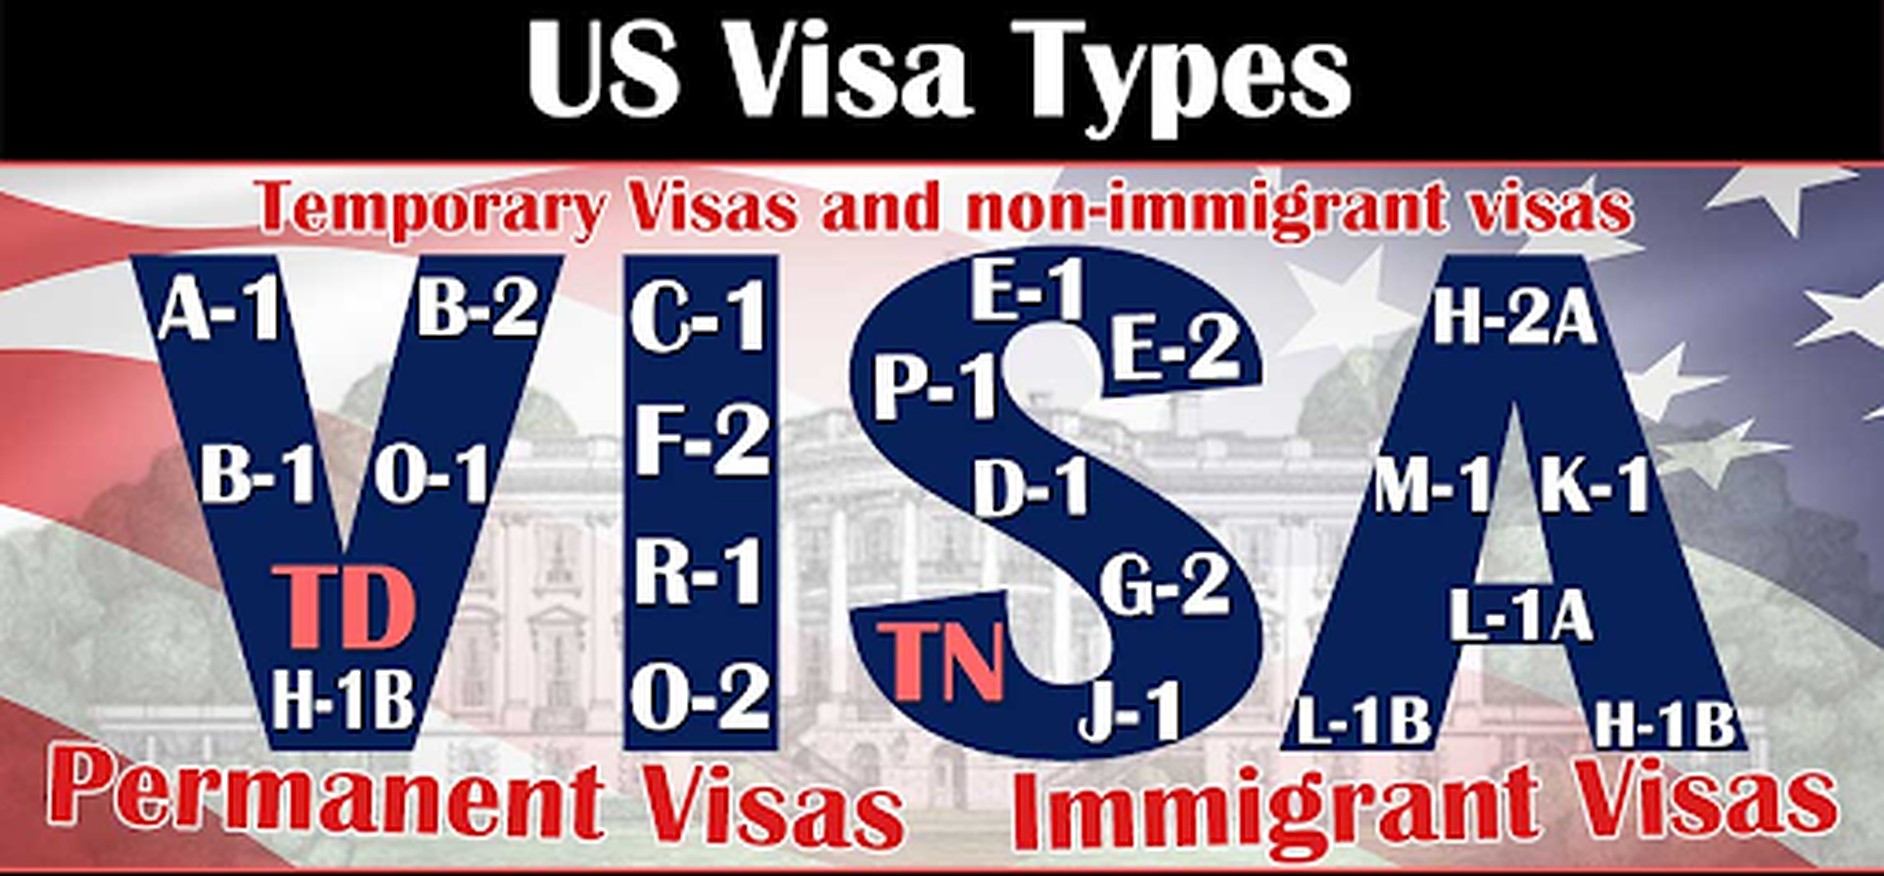 Visa type. USA visa Types. Us visa Type. Nonimmigrant visa Type. Types of visa in the us.